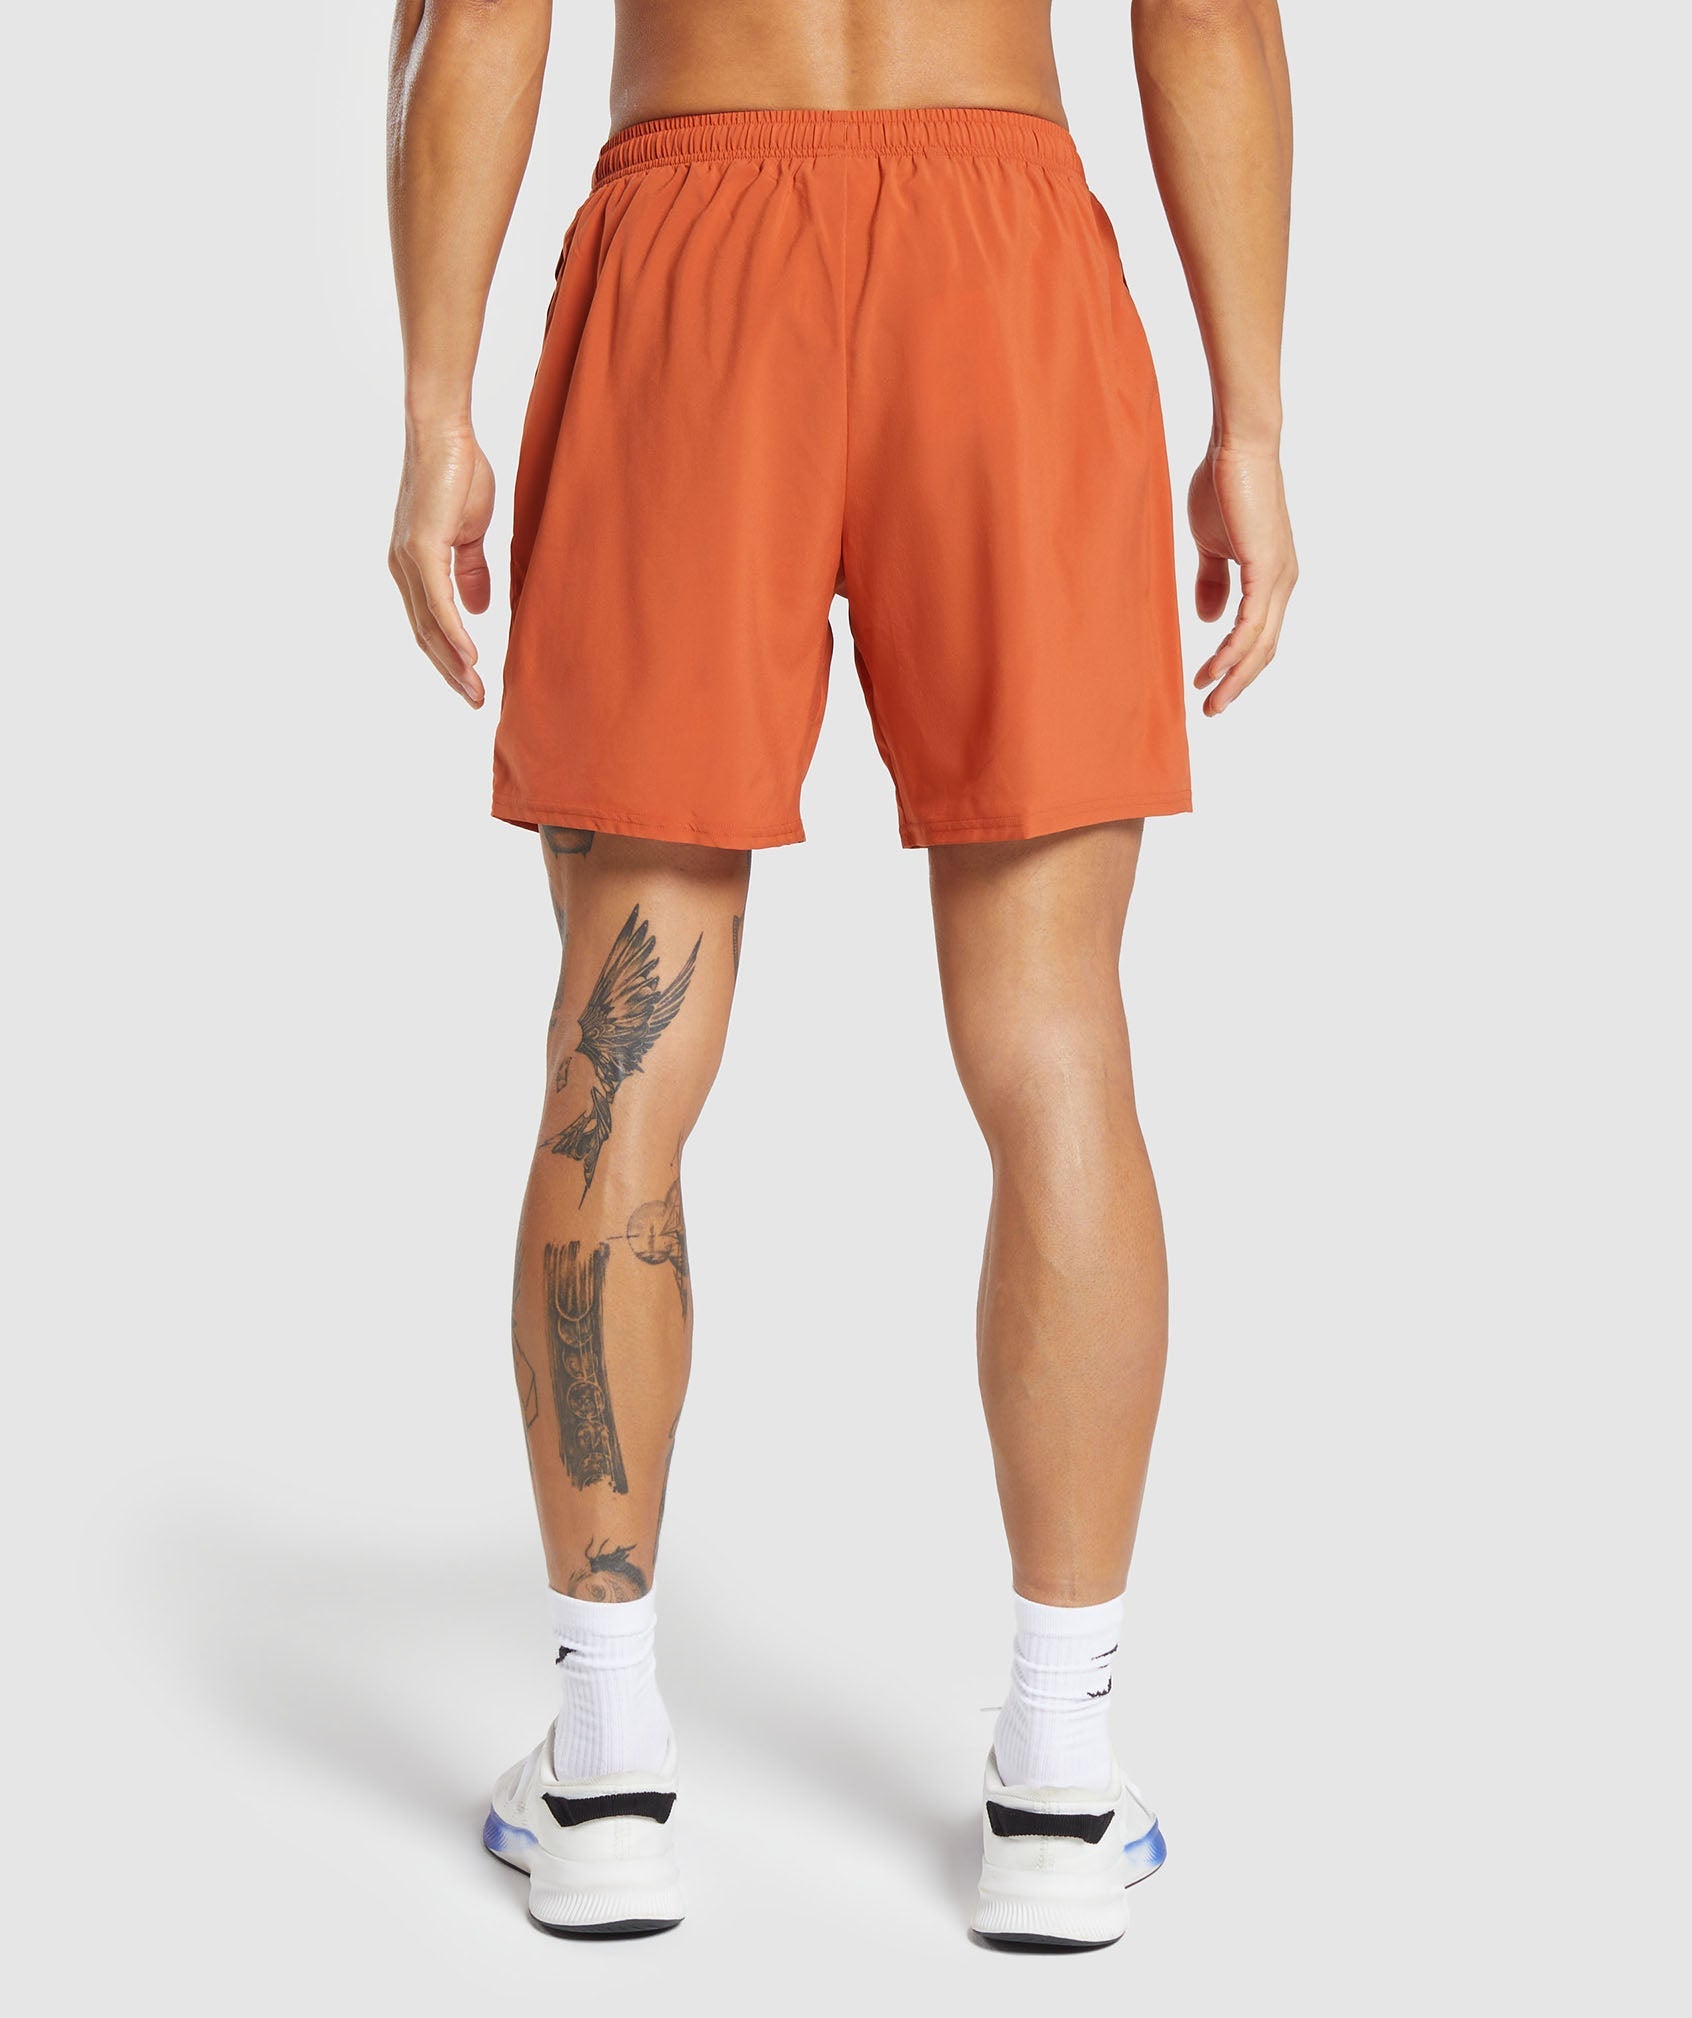 Hybrid Wellness 7" Shorts in Rust Orange - view 2